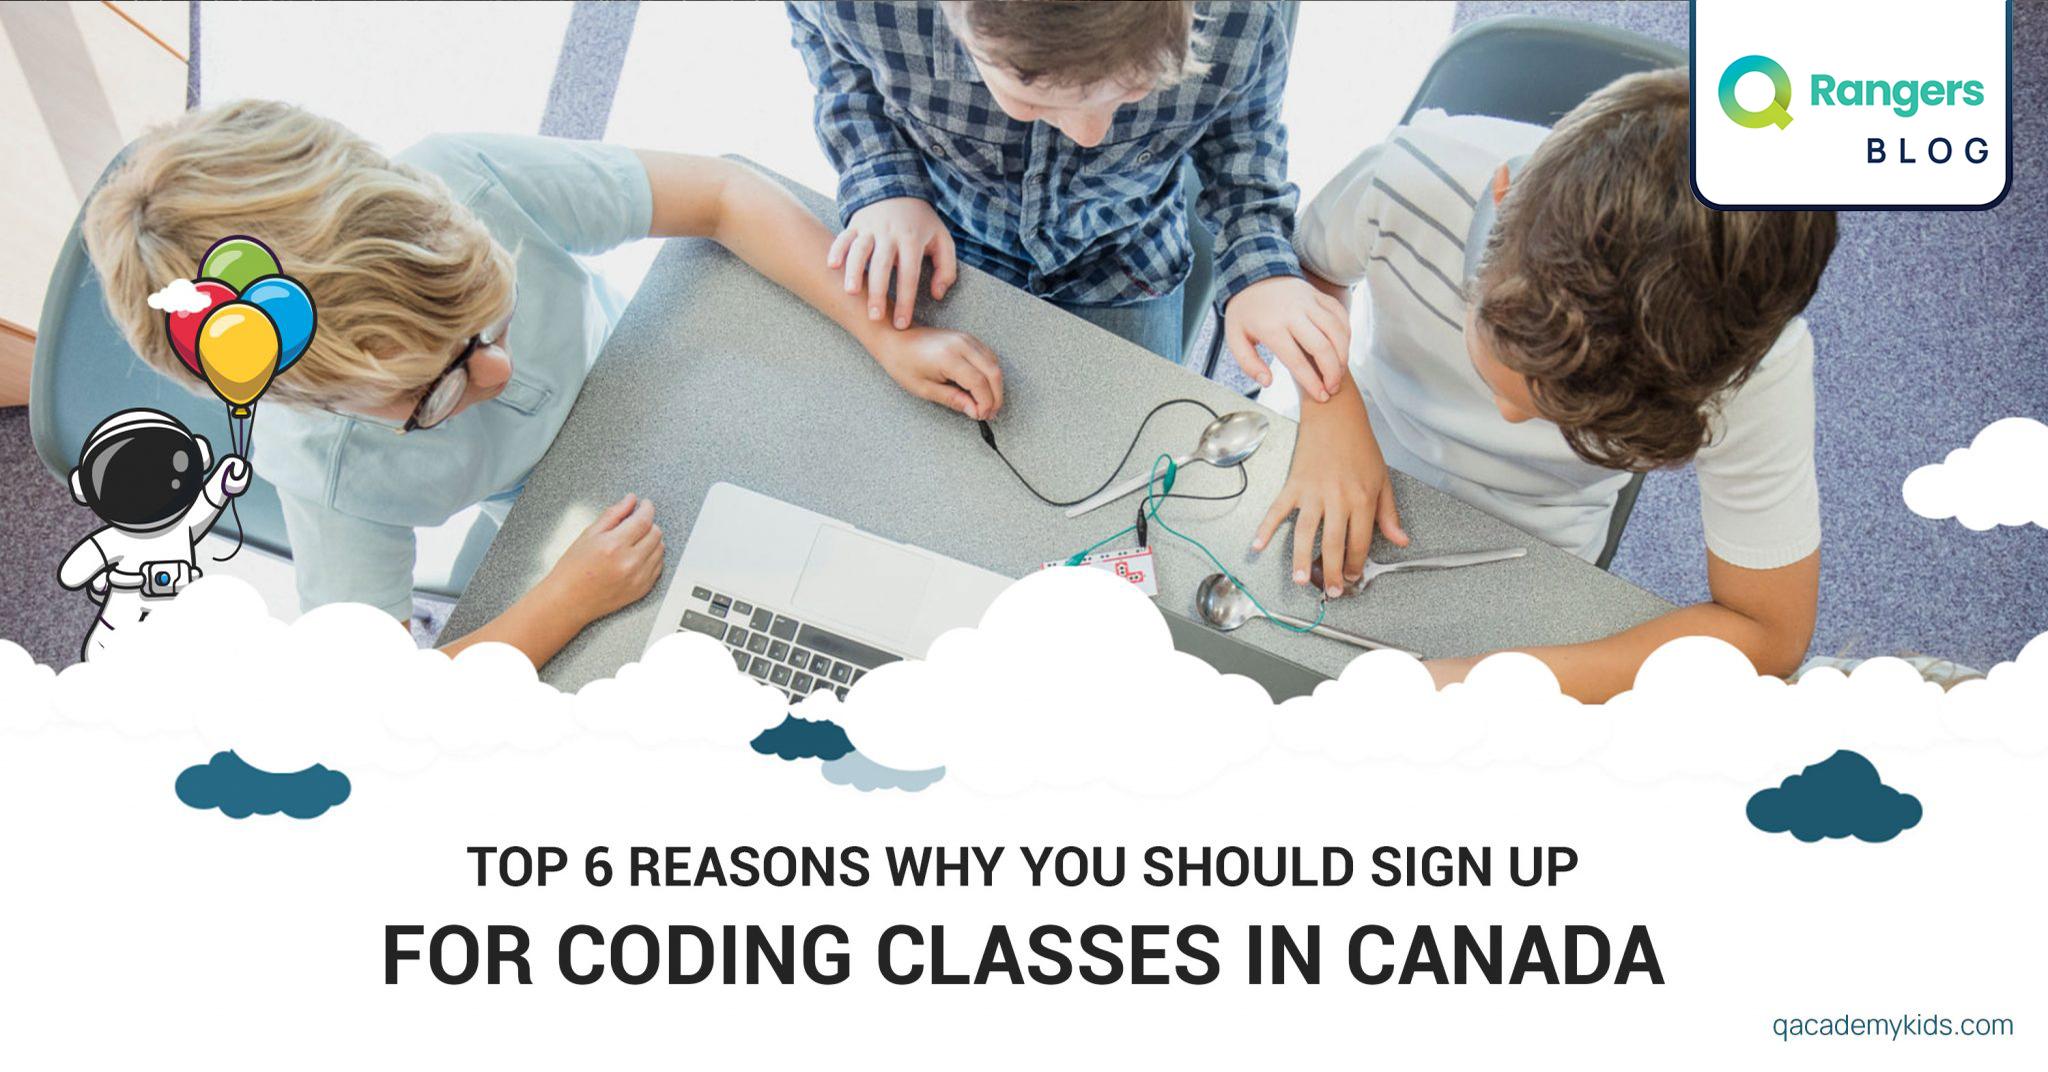 Coding classes in Canada